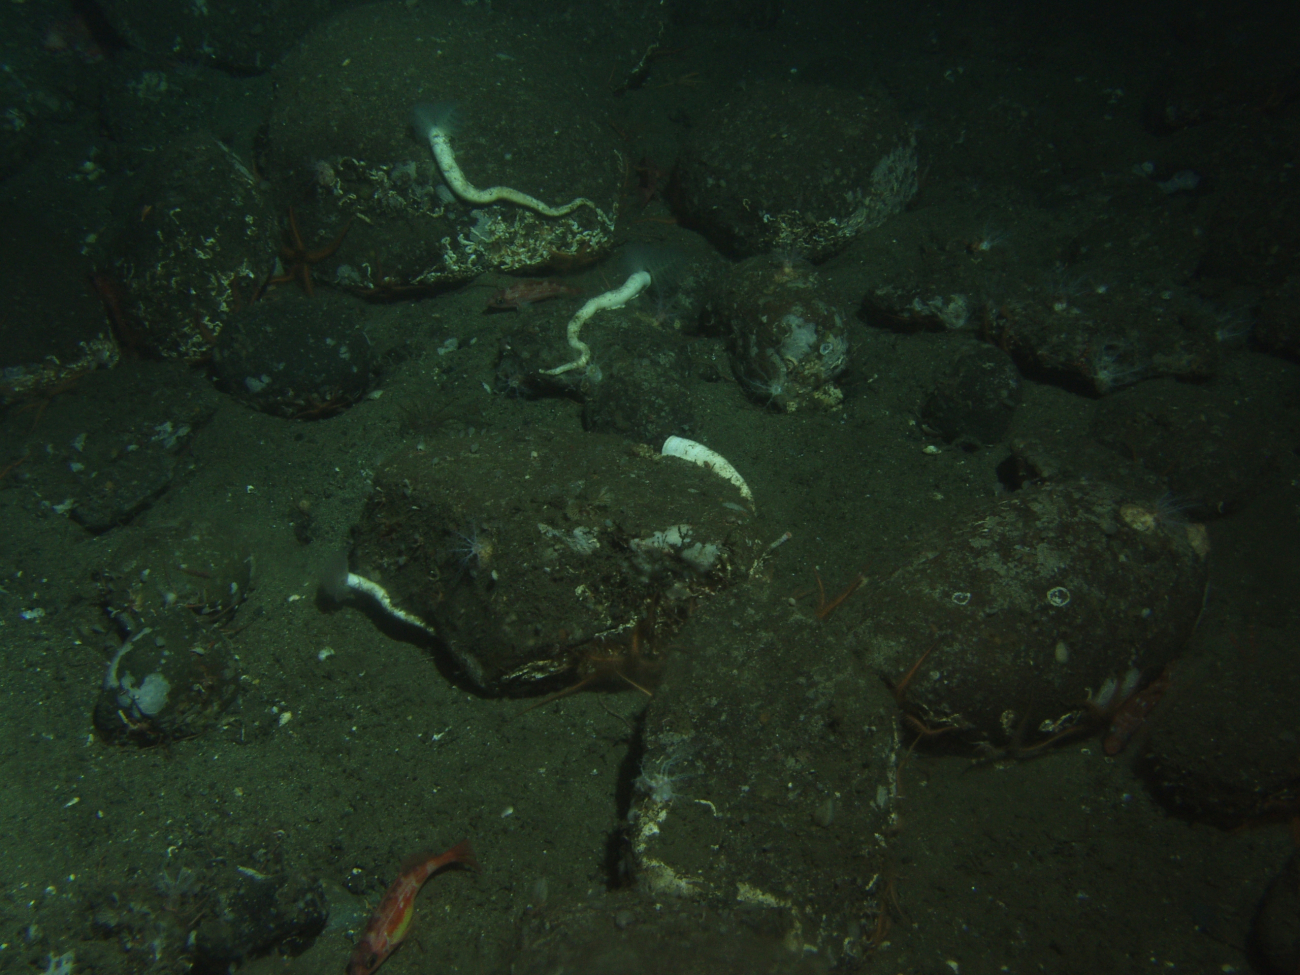 Cobble habitat with tube worms (Phragmatopoma californica) and pygmy rockfish(Sebastes wilsoni) at 130 meters depth